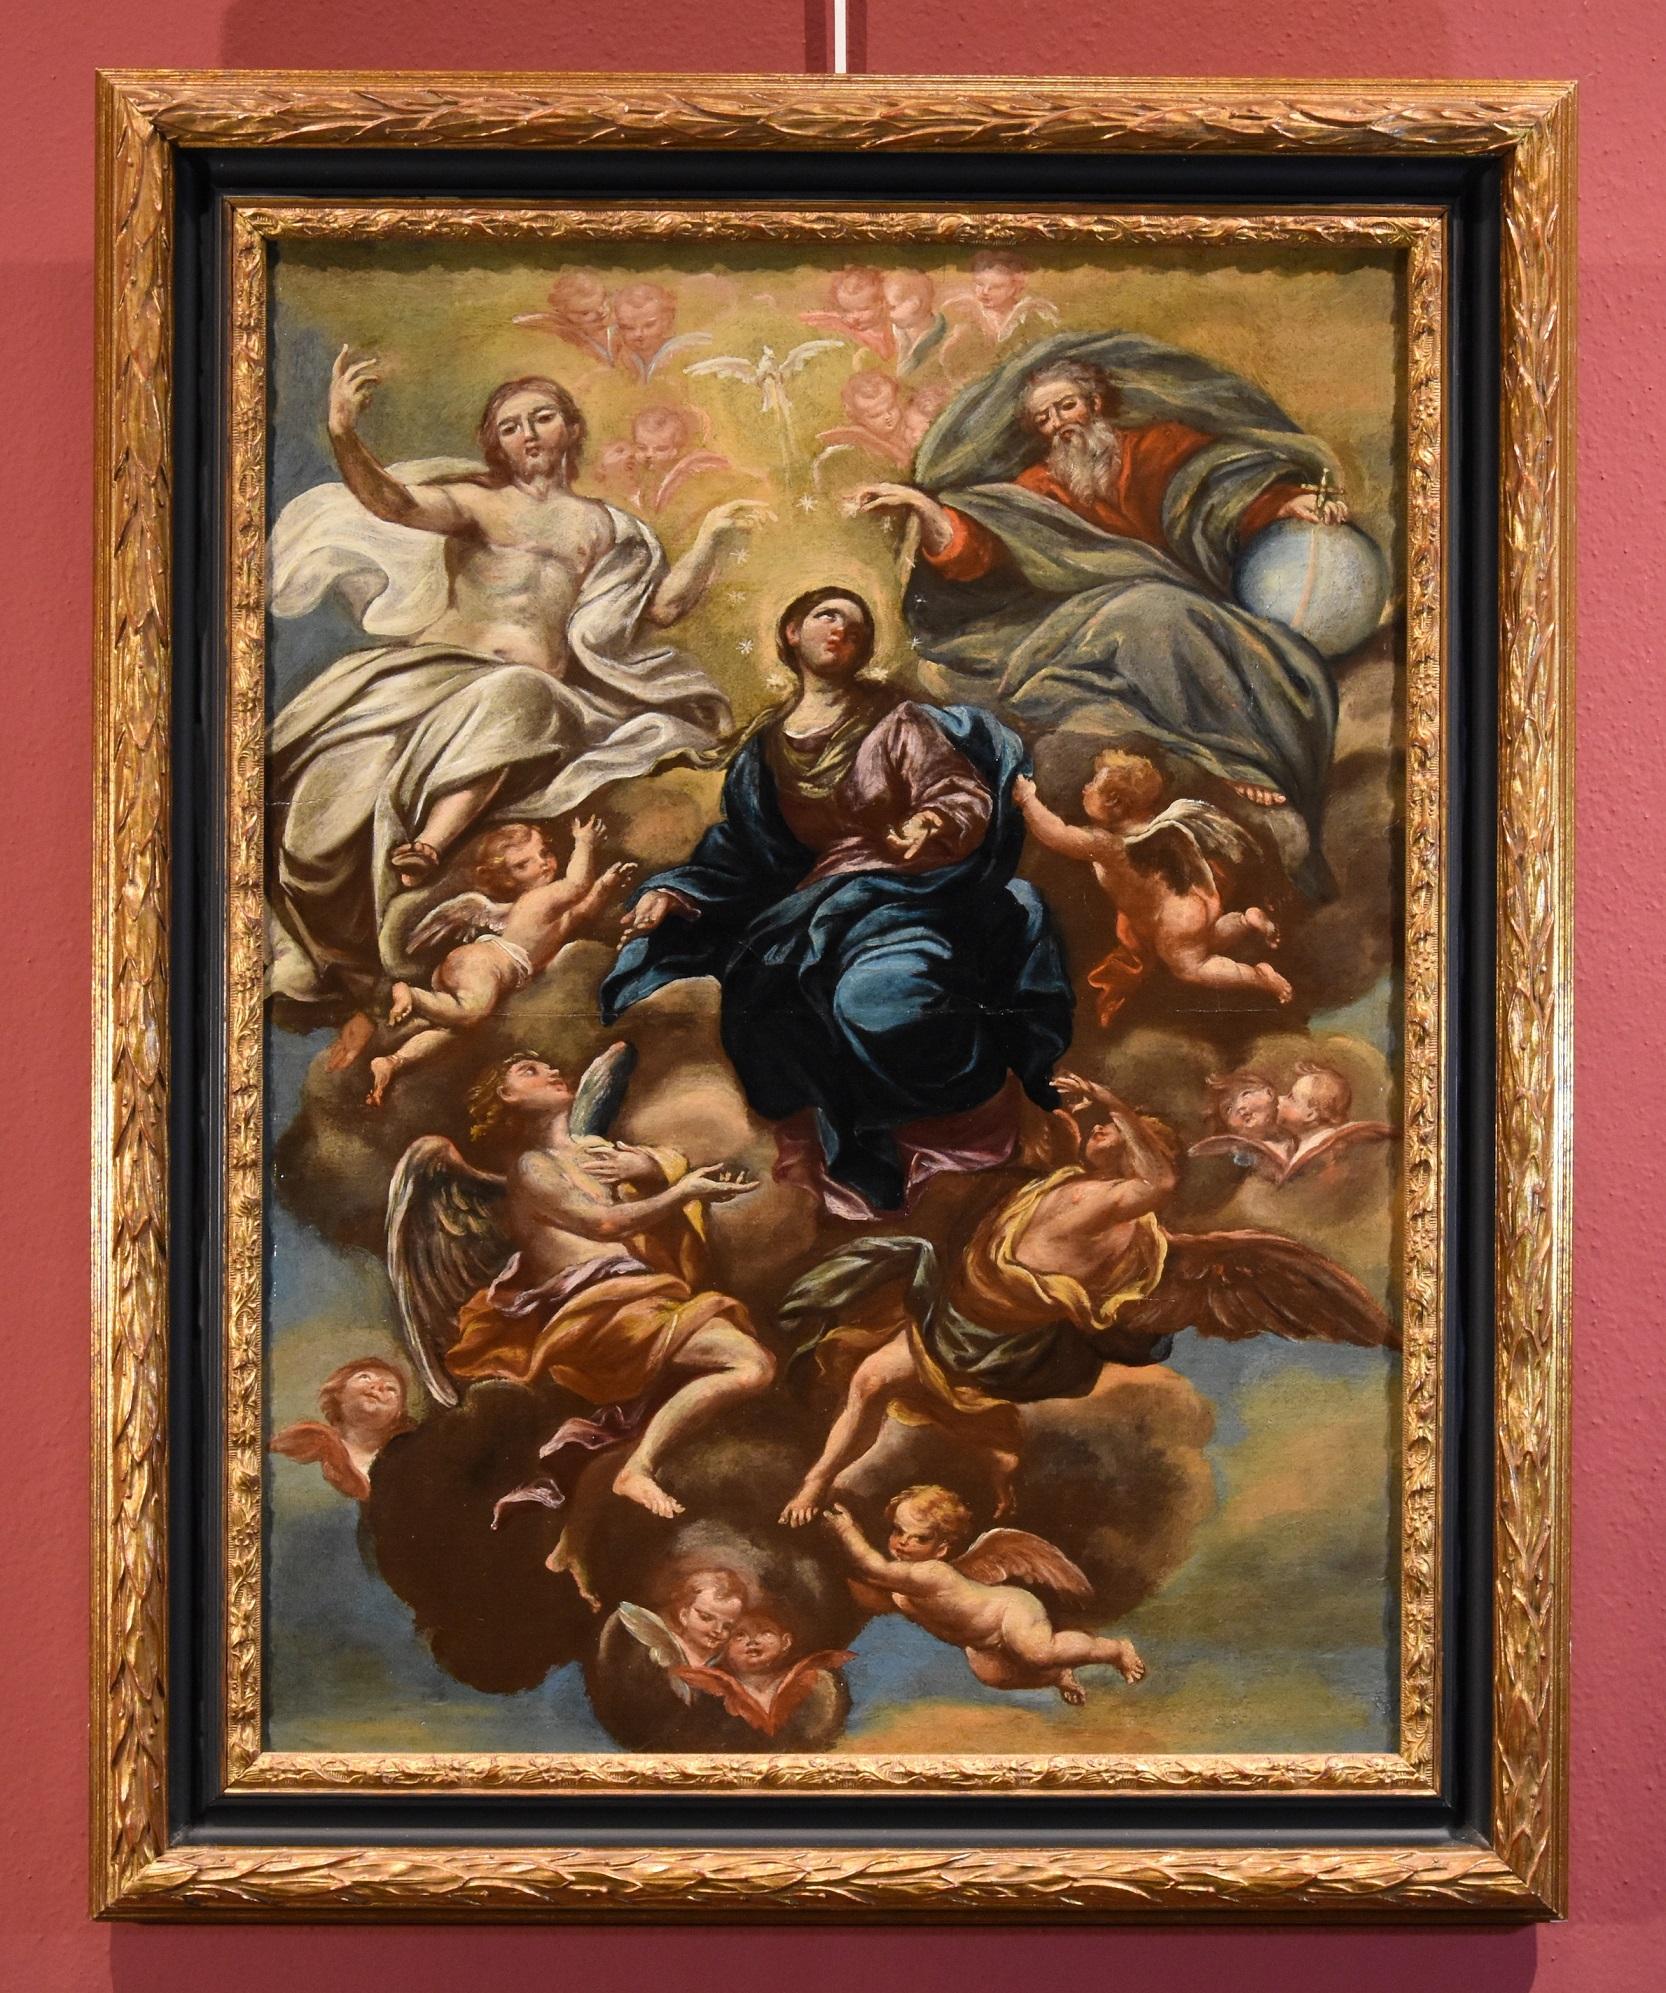 Virgin De Caro Paint Oil on camvas Old master 18th Century Religious Italian Art - Painting by Lorenzo de Caro (Naples, 1719 - 1777)